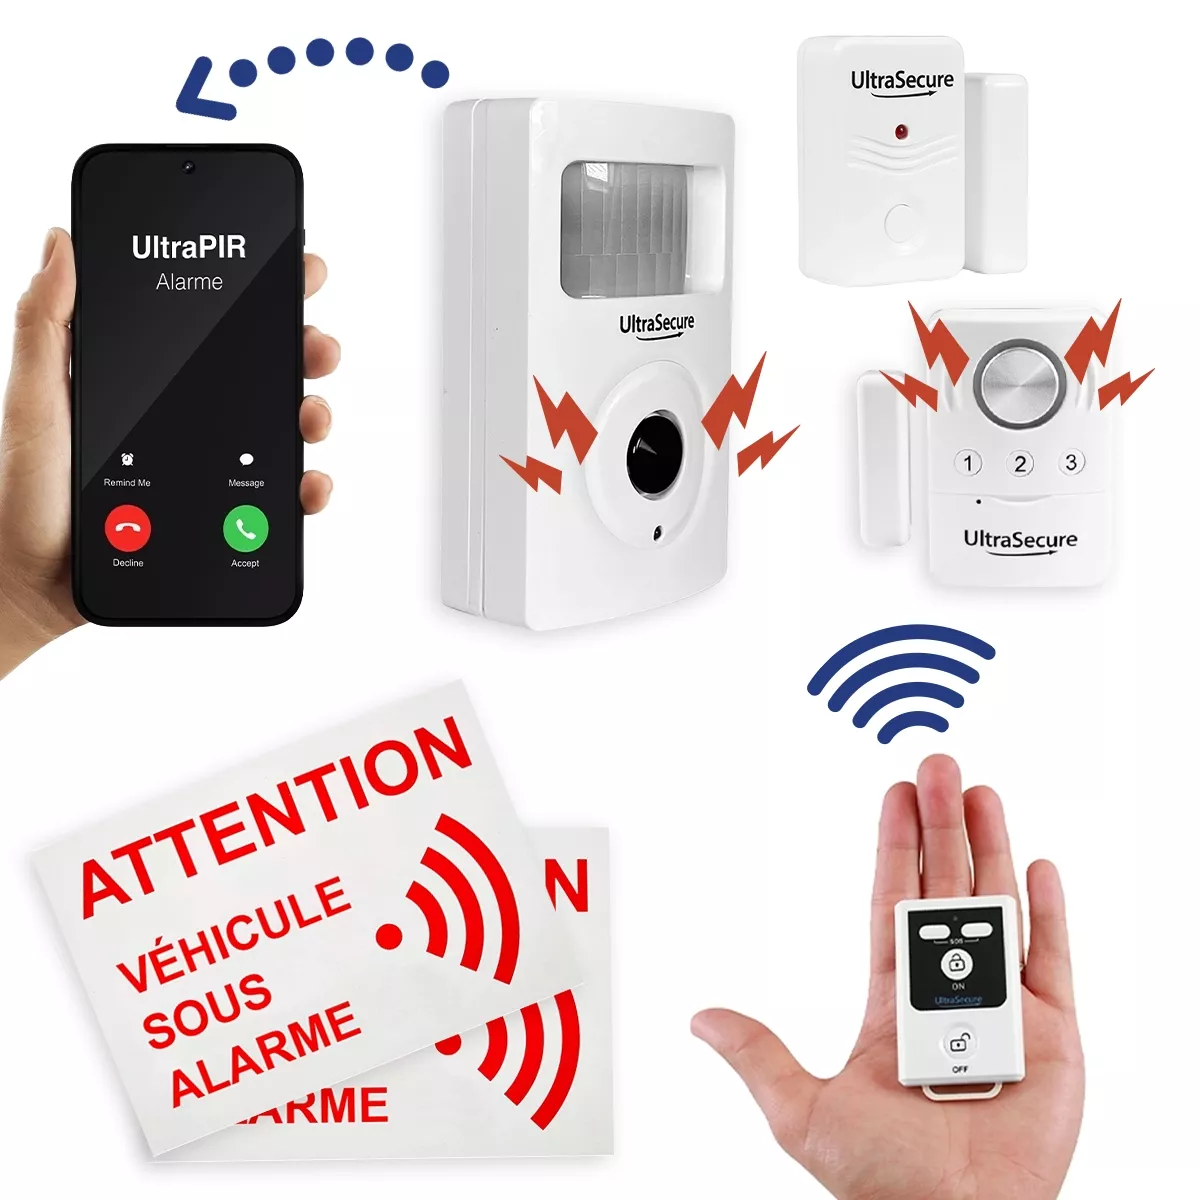 Home Alarm Integral Video Plus - Alarme video connectée